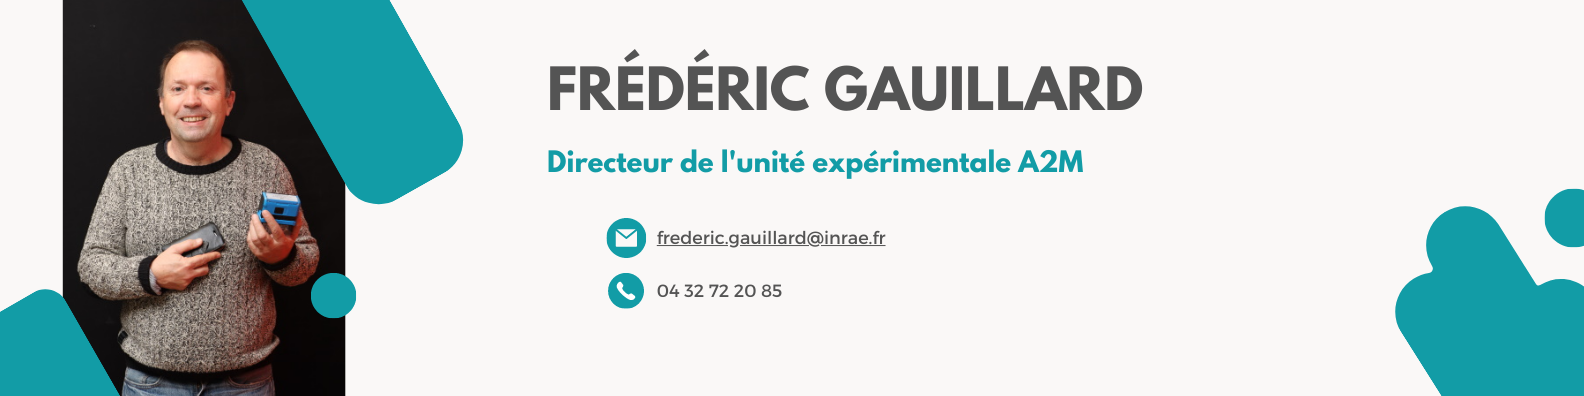 Frédéric Gauillard.png